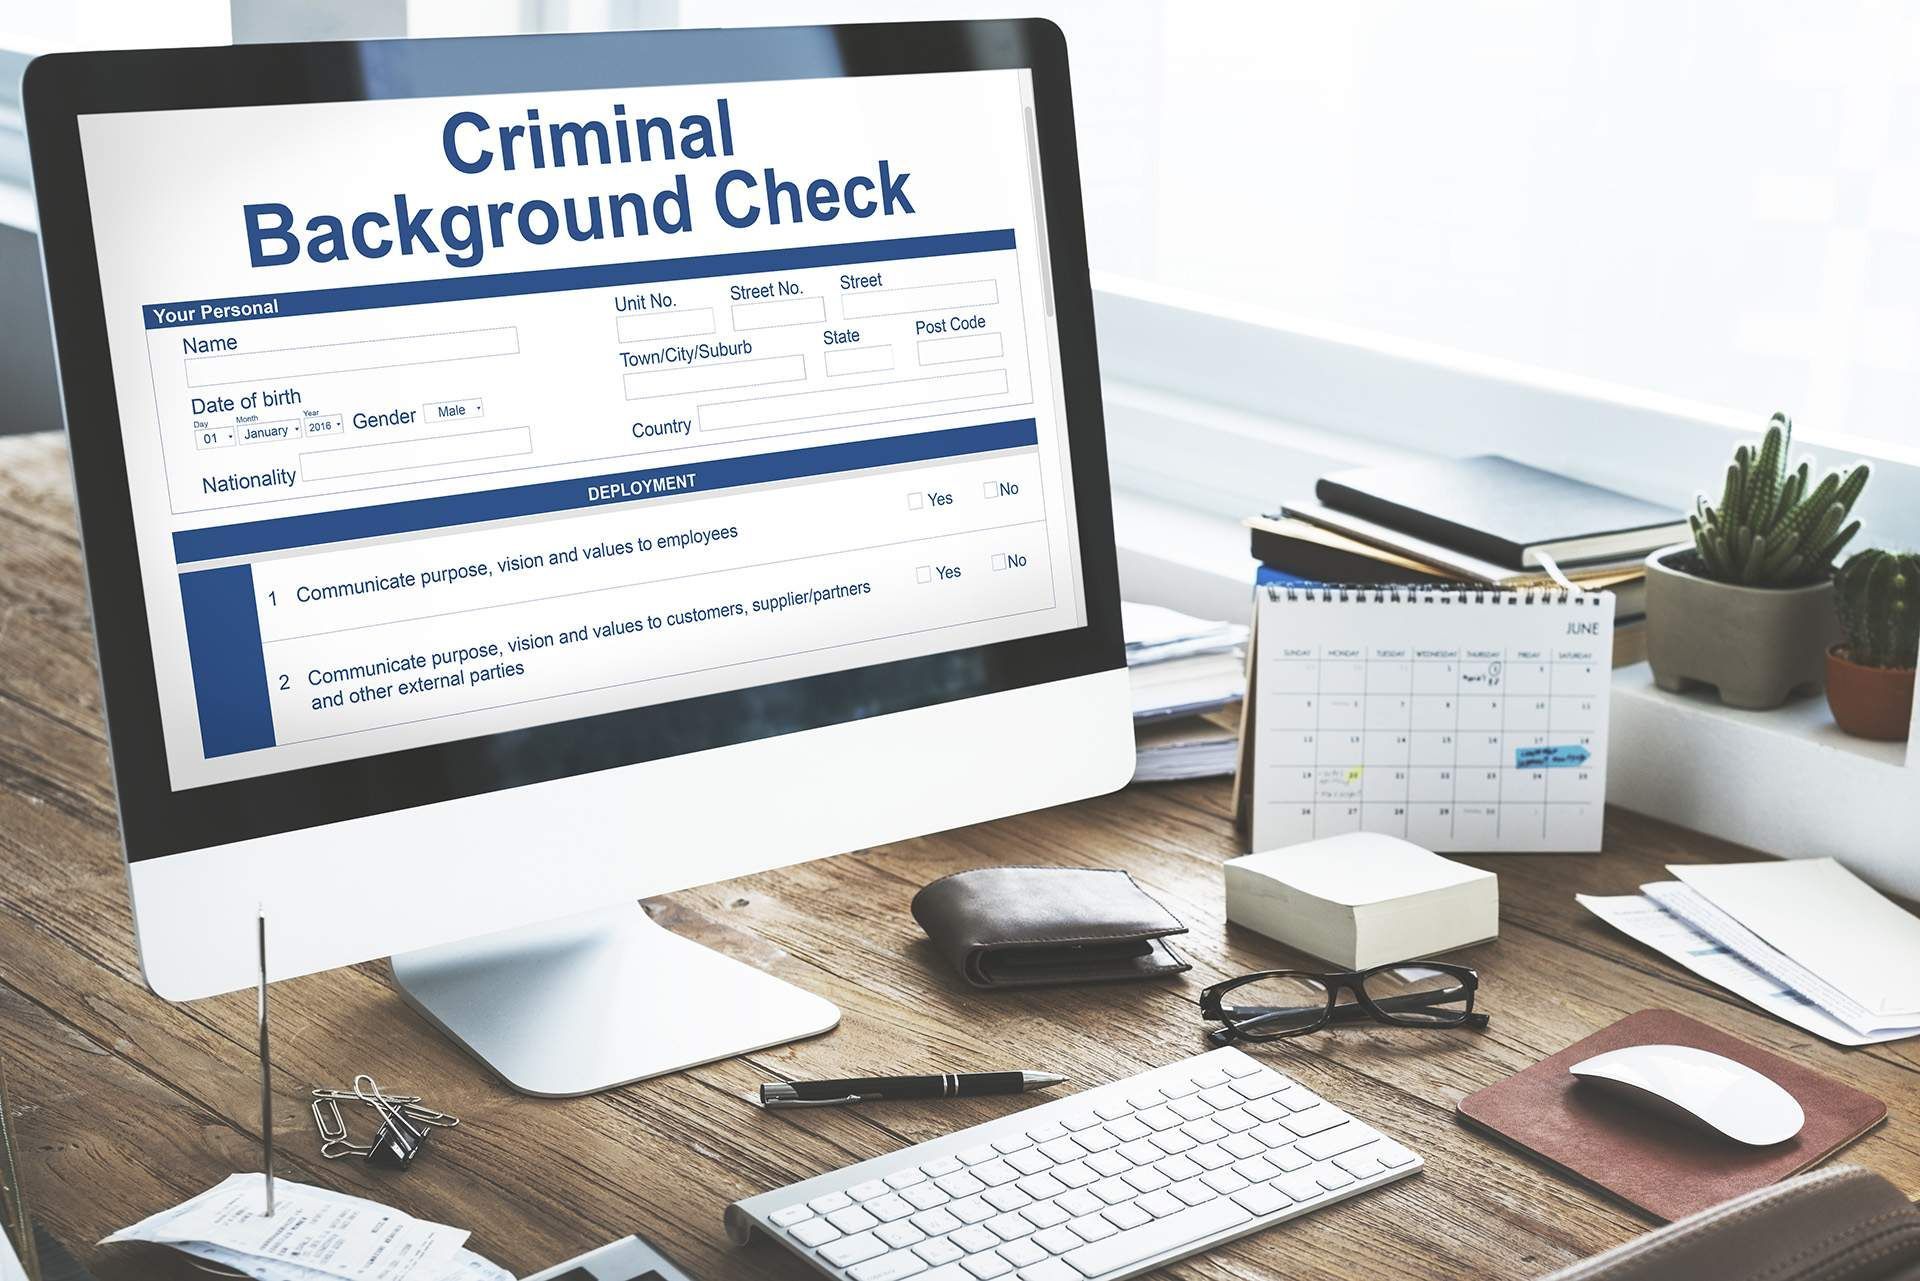 Basic Background Check Services in Orlando, FL